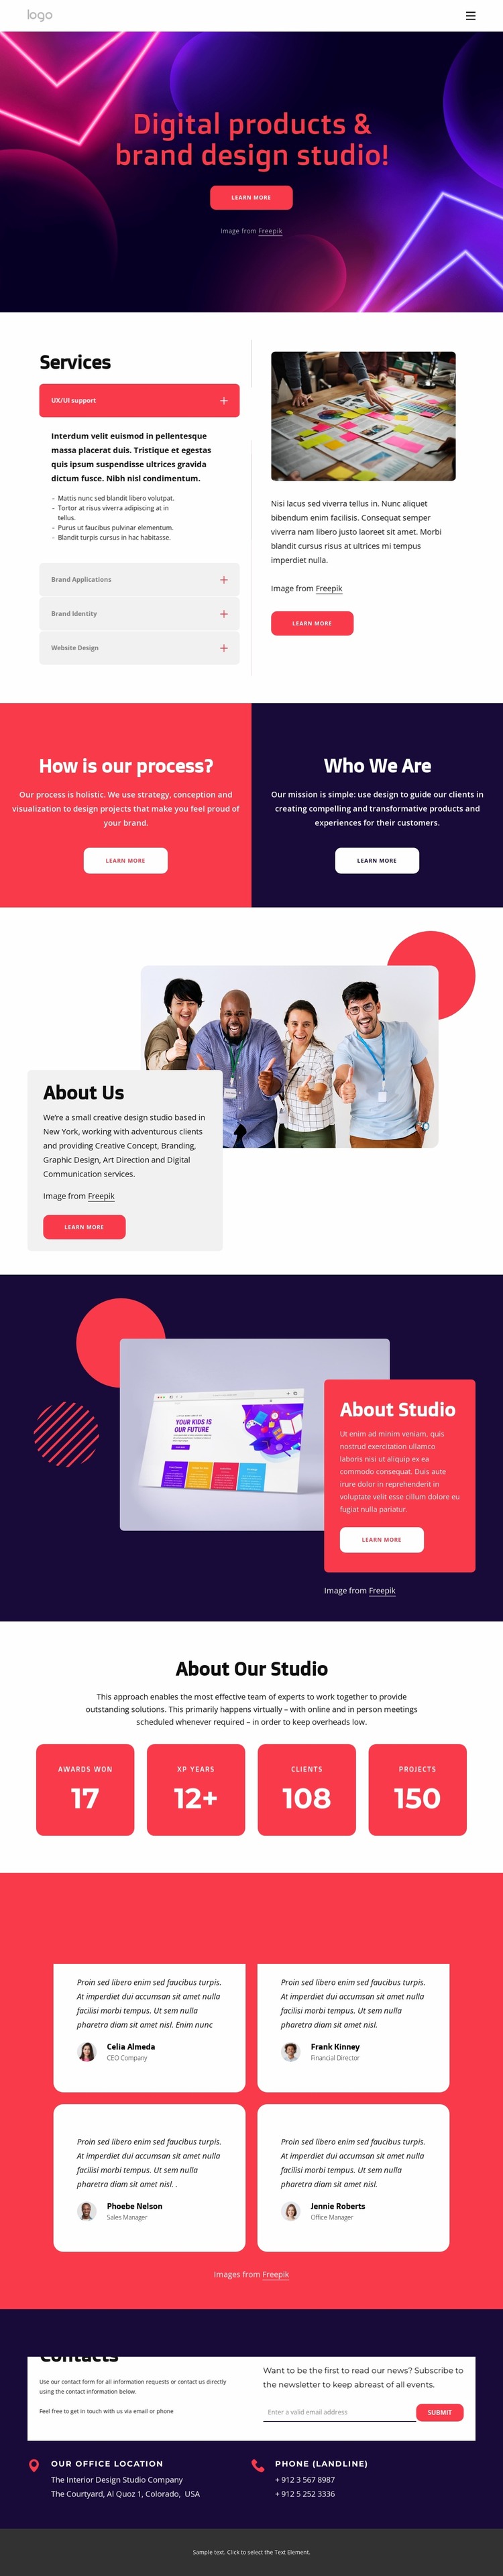 Digital products and brand design studio Website Mockup